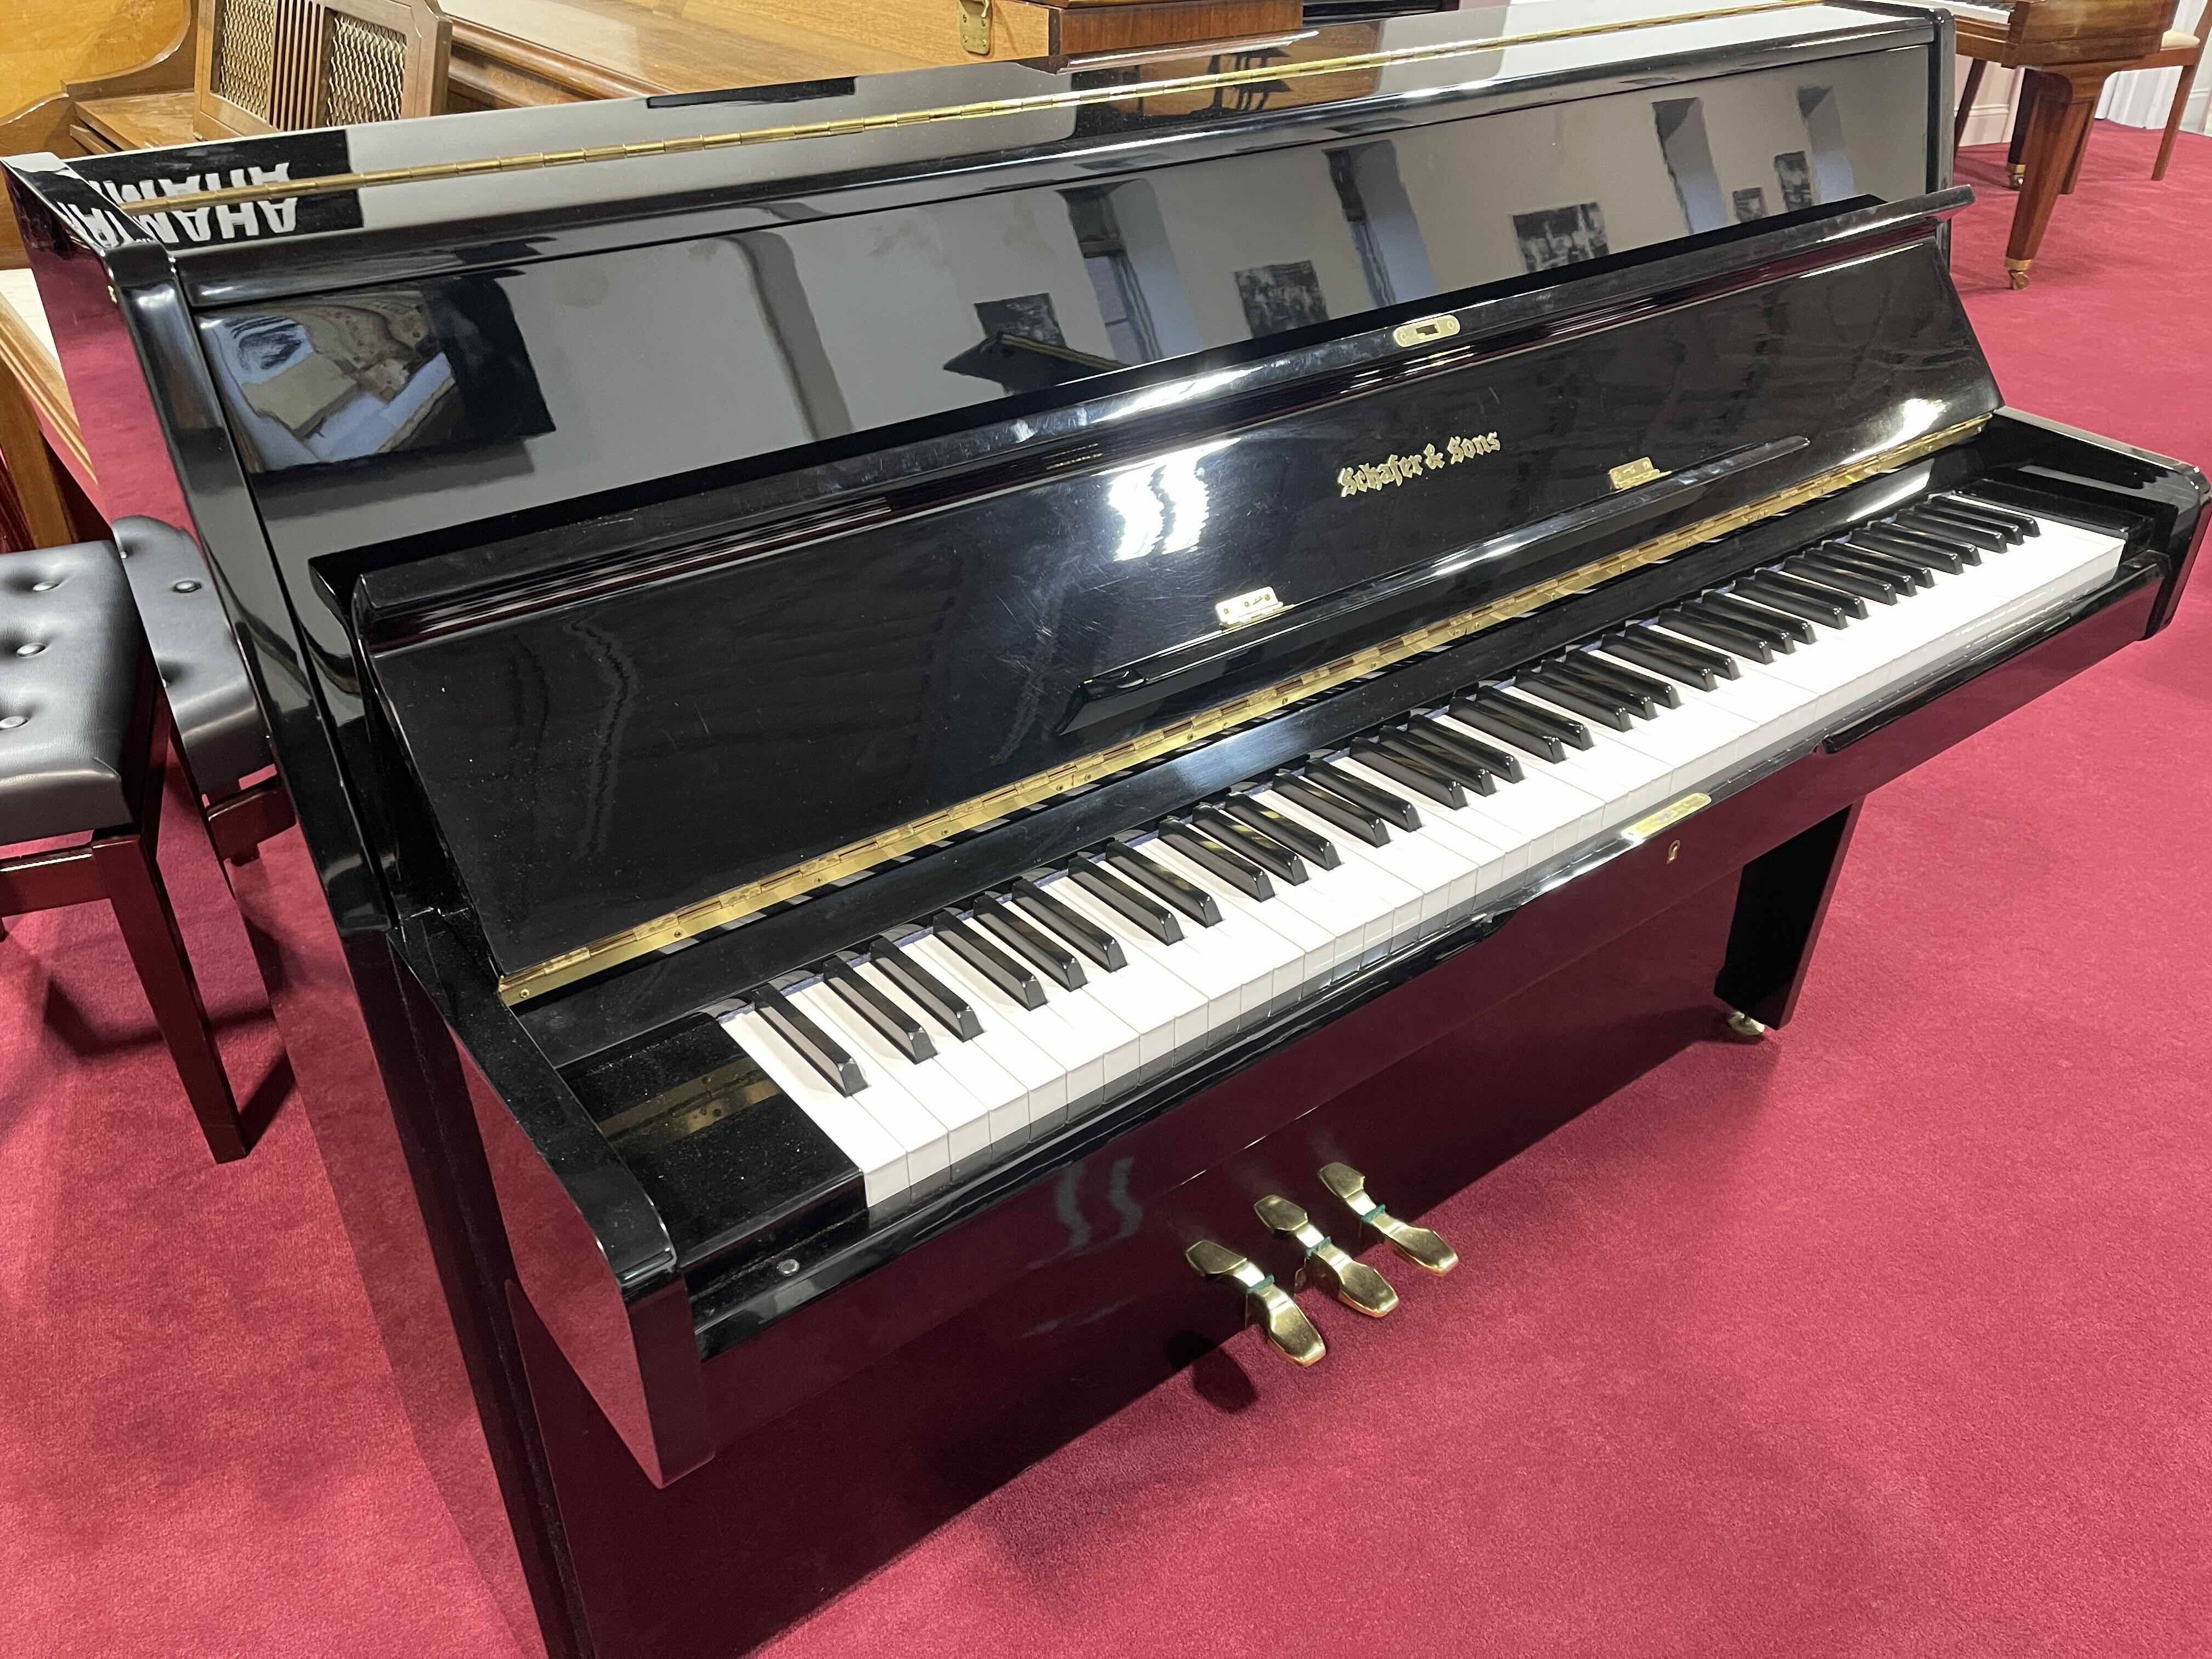 Schafer & Sons VS-42 professional console piano